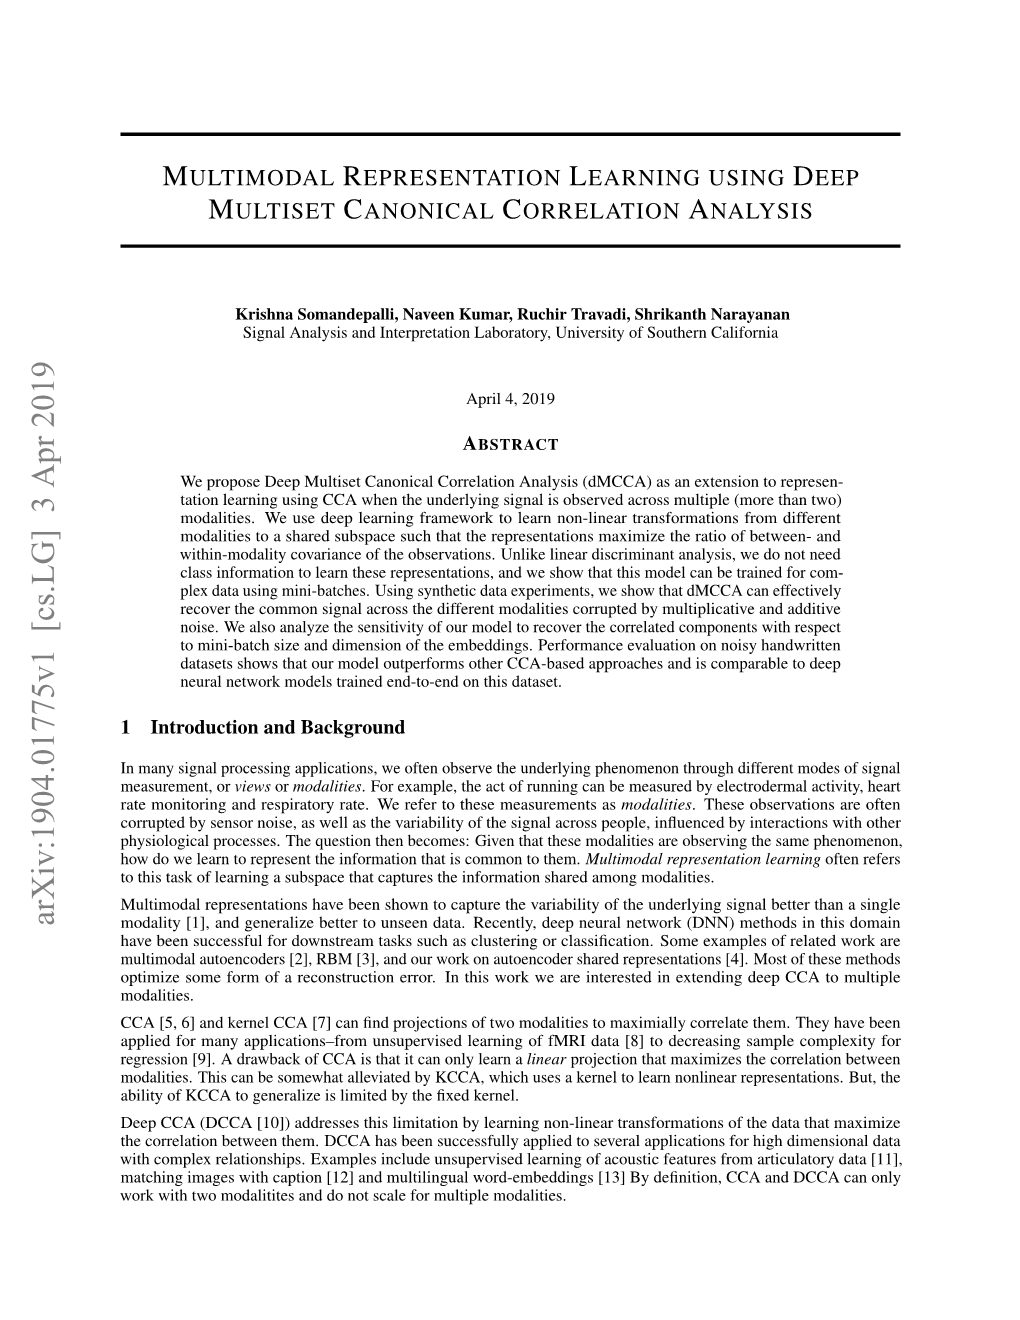 Multimodal Representation Learning Using Deep Multiset Canonical